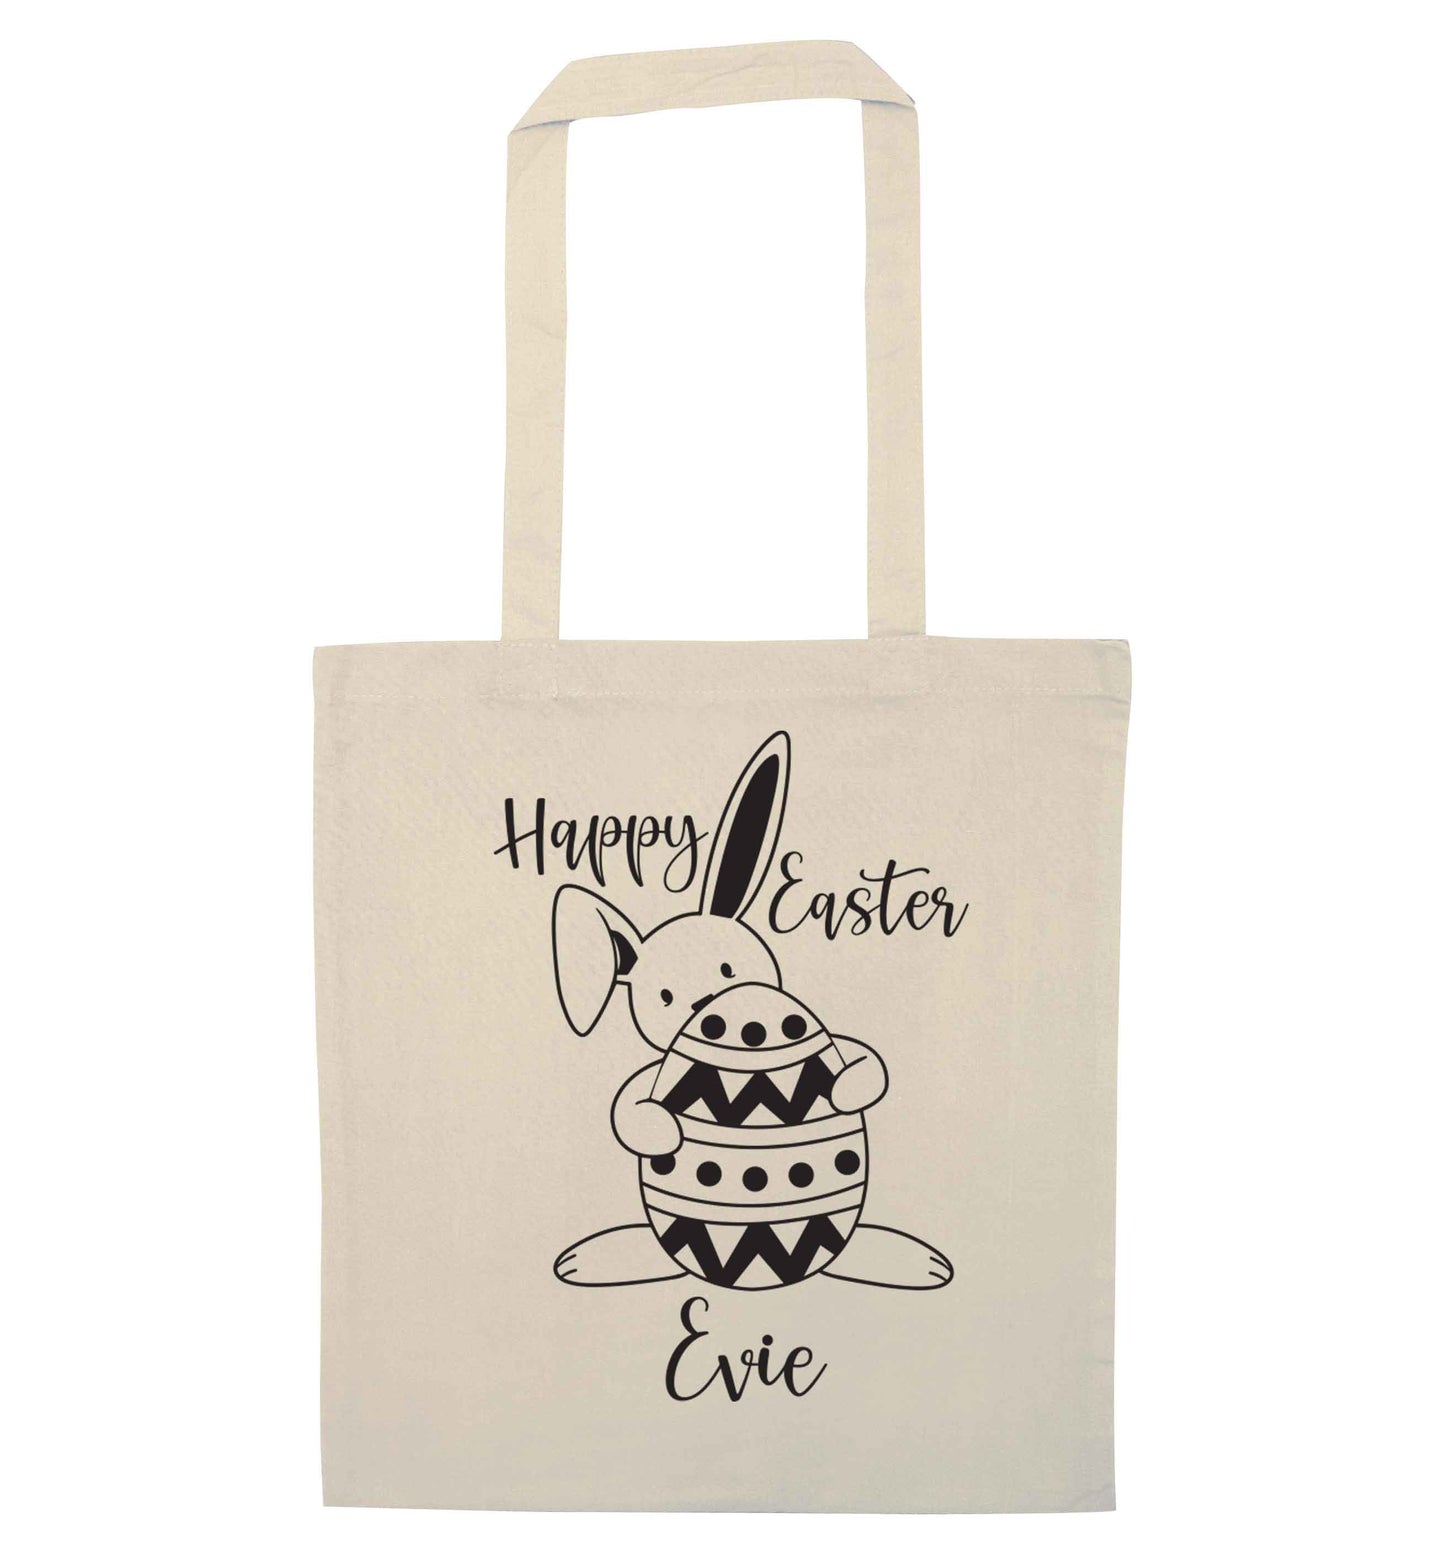 Happy Easter - personalised natural tote bag